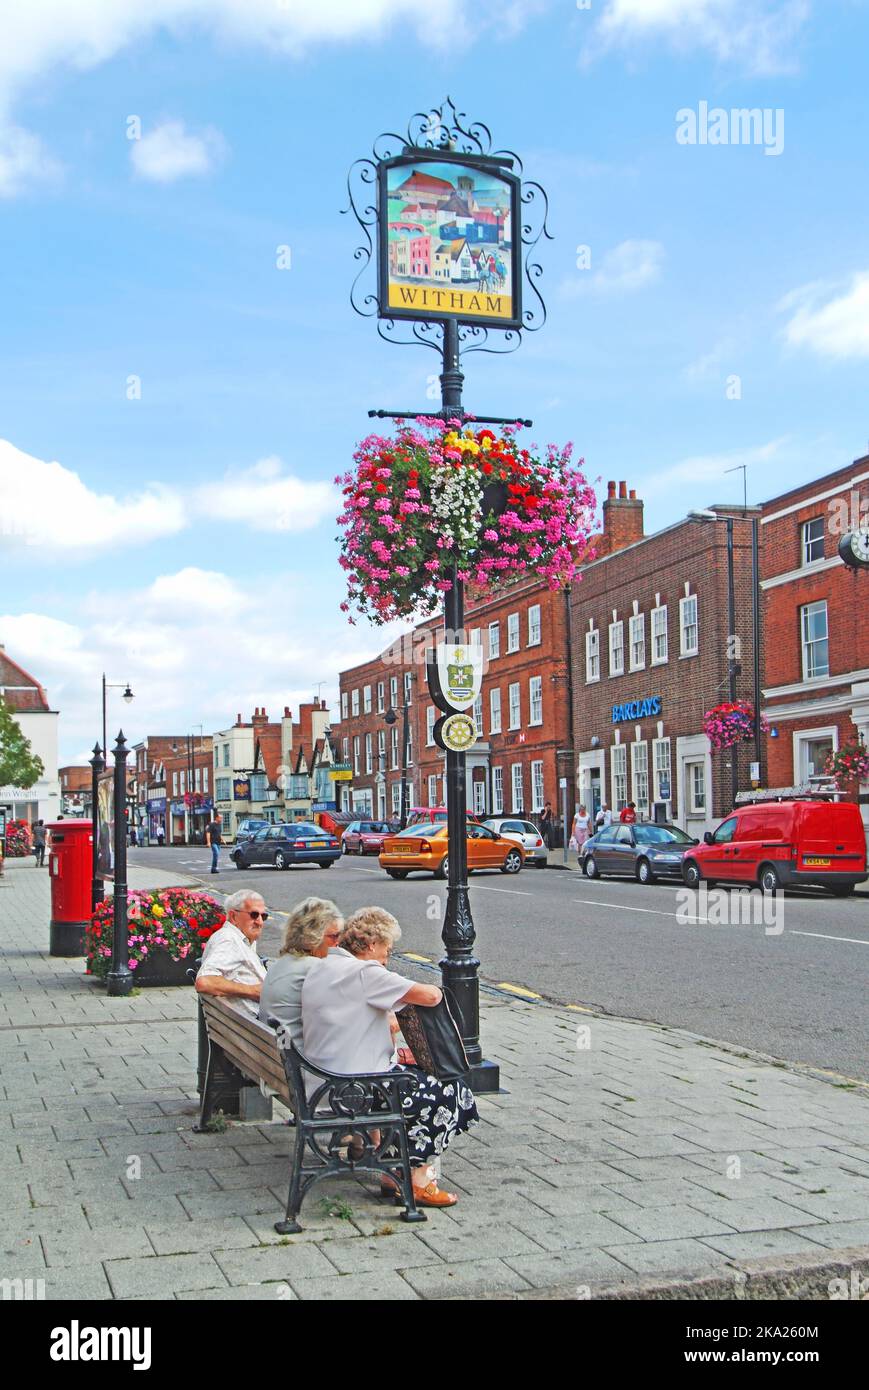 Centro de la ciudad de Witham Newland Street signo & histórico características coloridas flores de verano colgando cesta floral mostrar personas relajante Essex Inglaterra Reino Unido Foto de stock